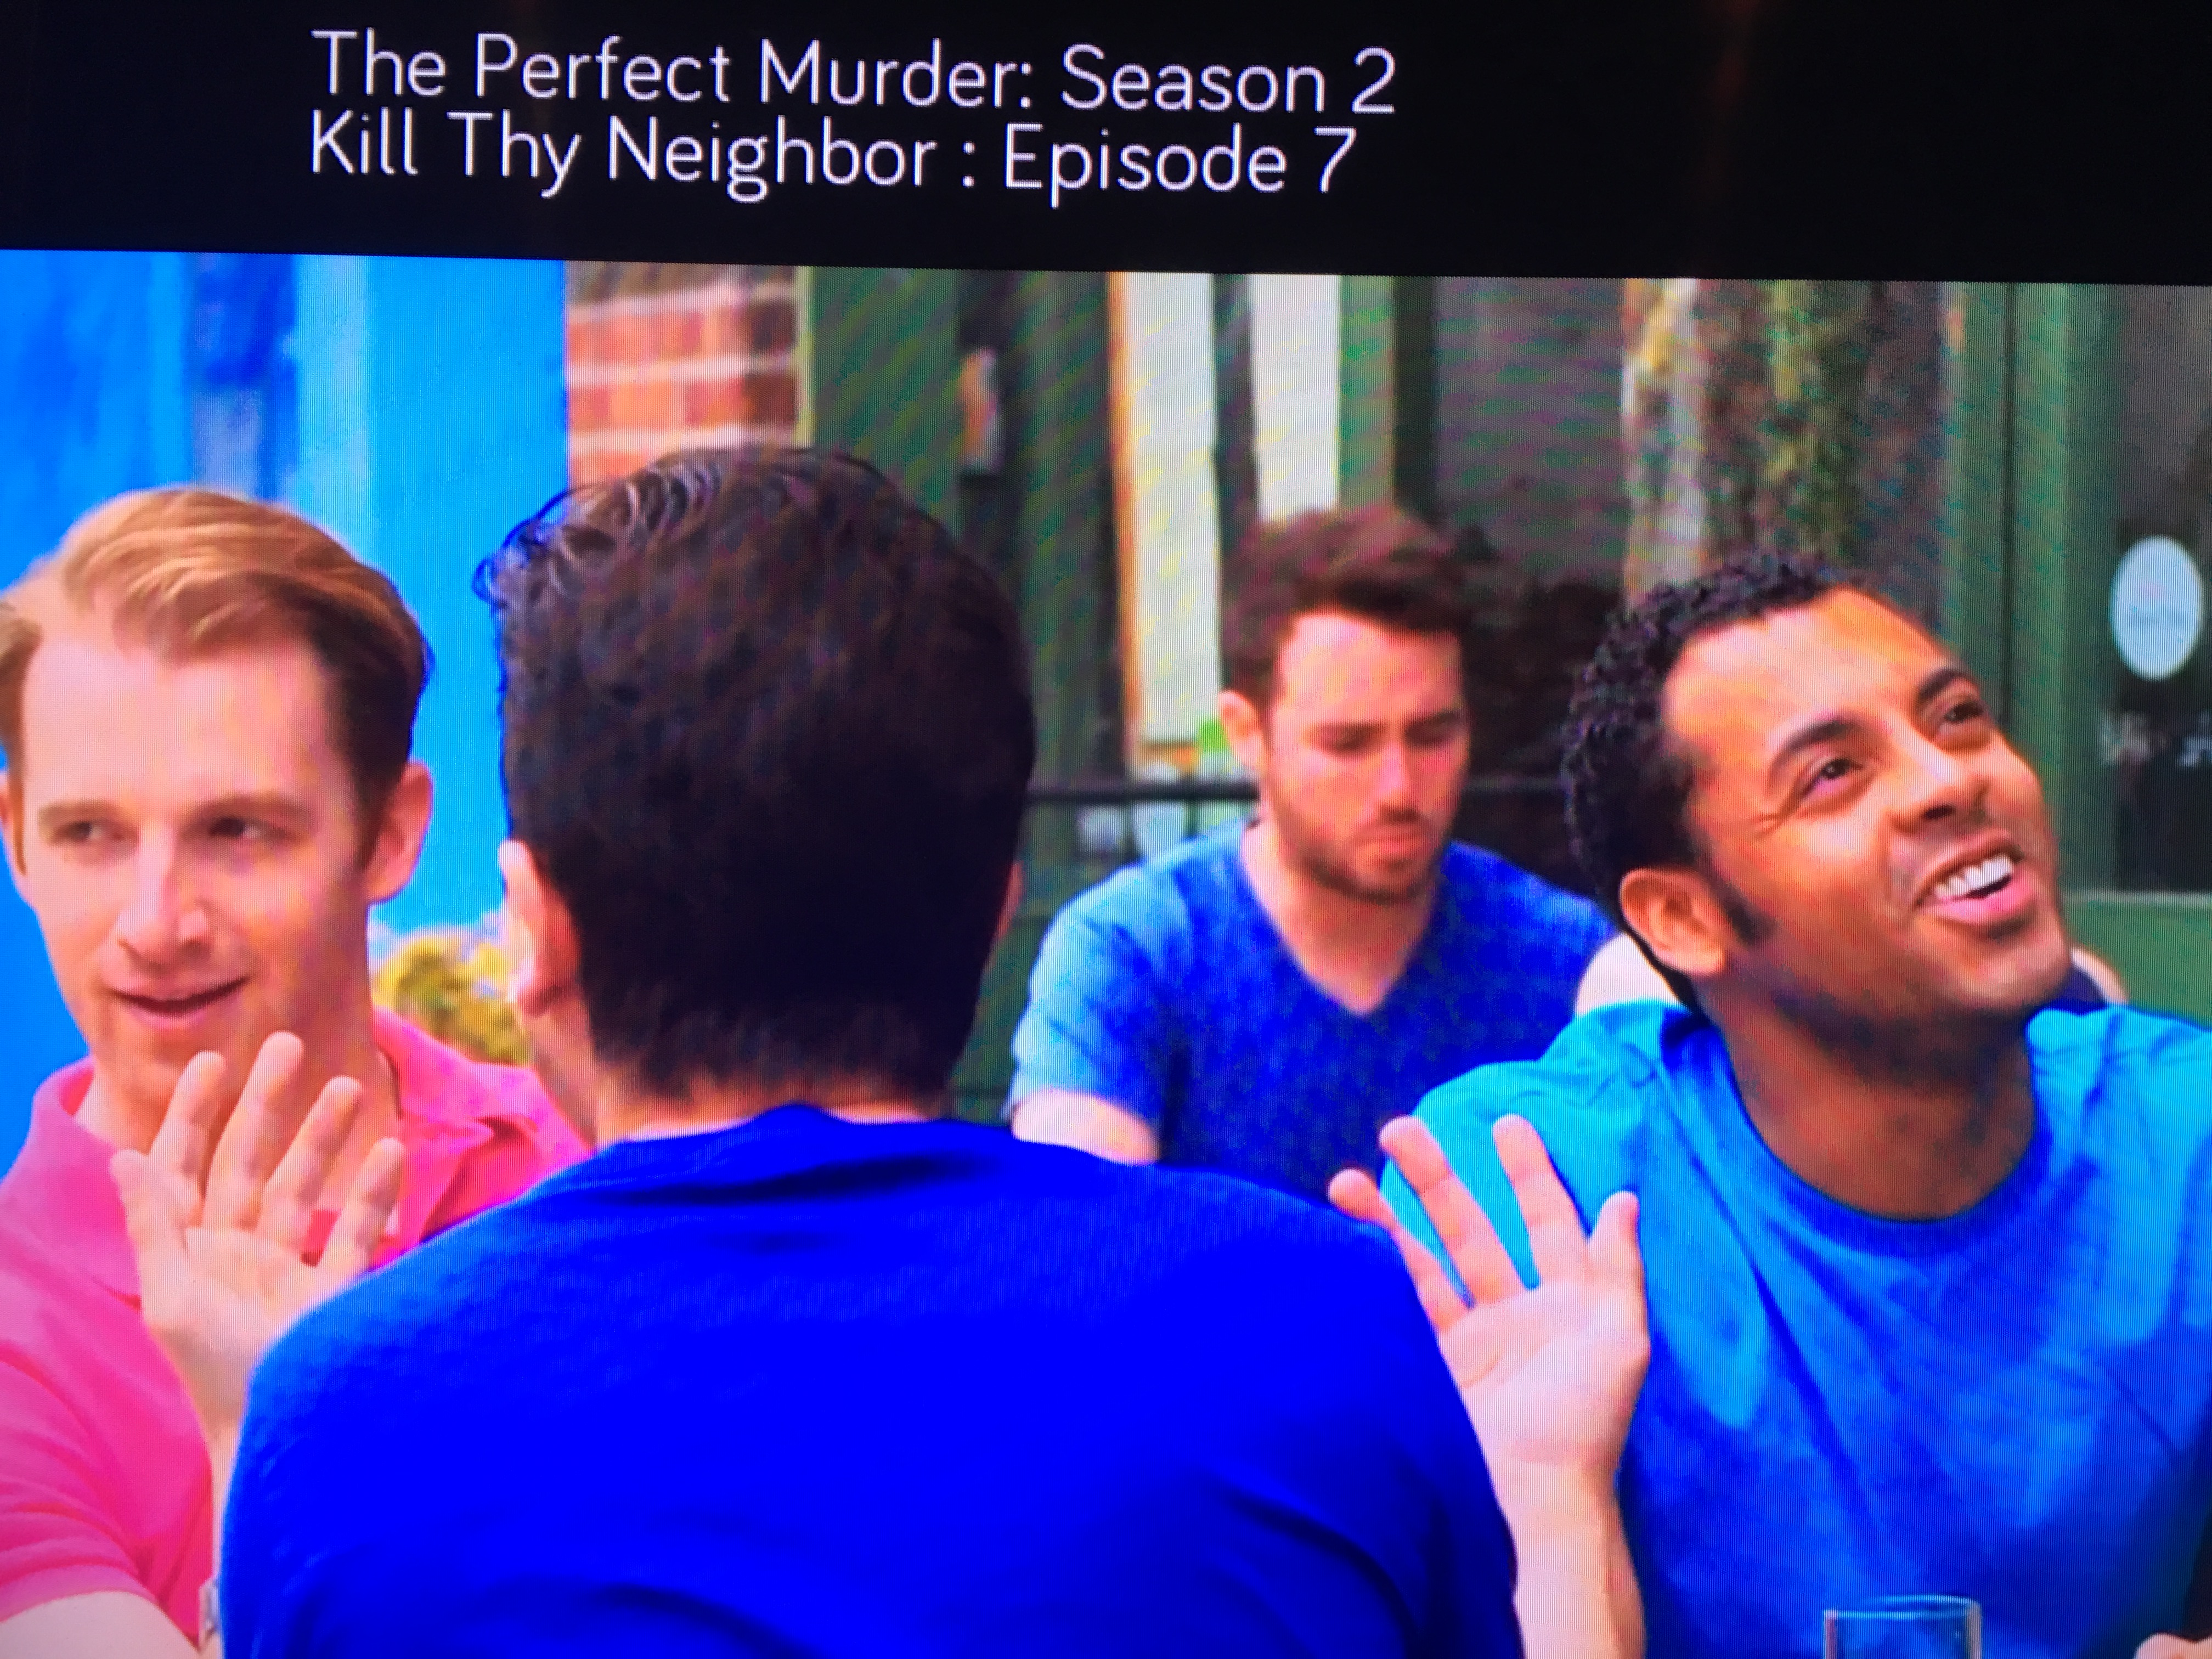 The perfect murder season 2 screen shot David's friend 2 played my Mario Tarquinio